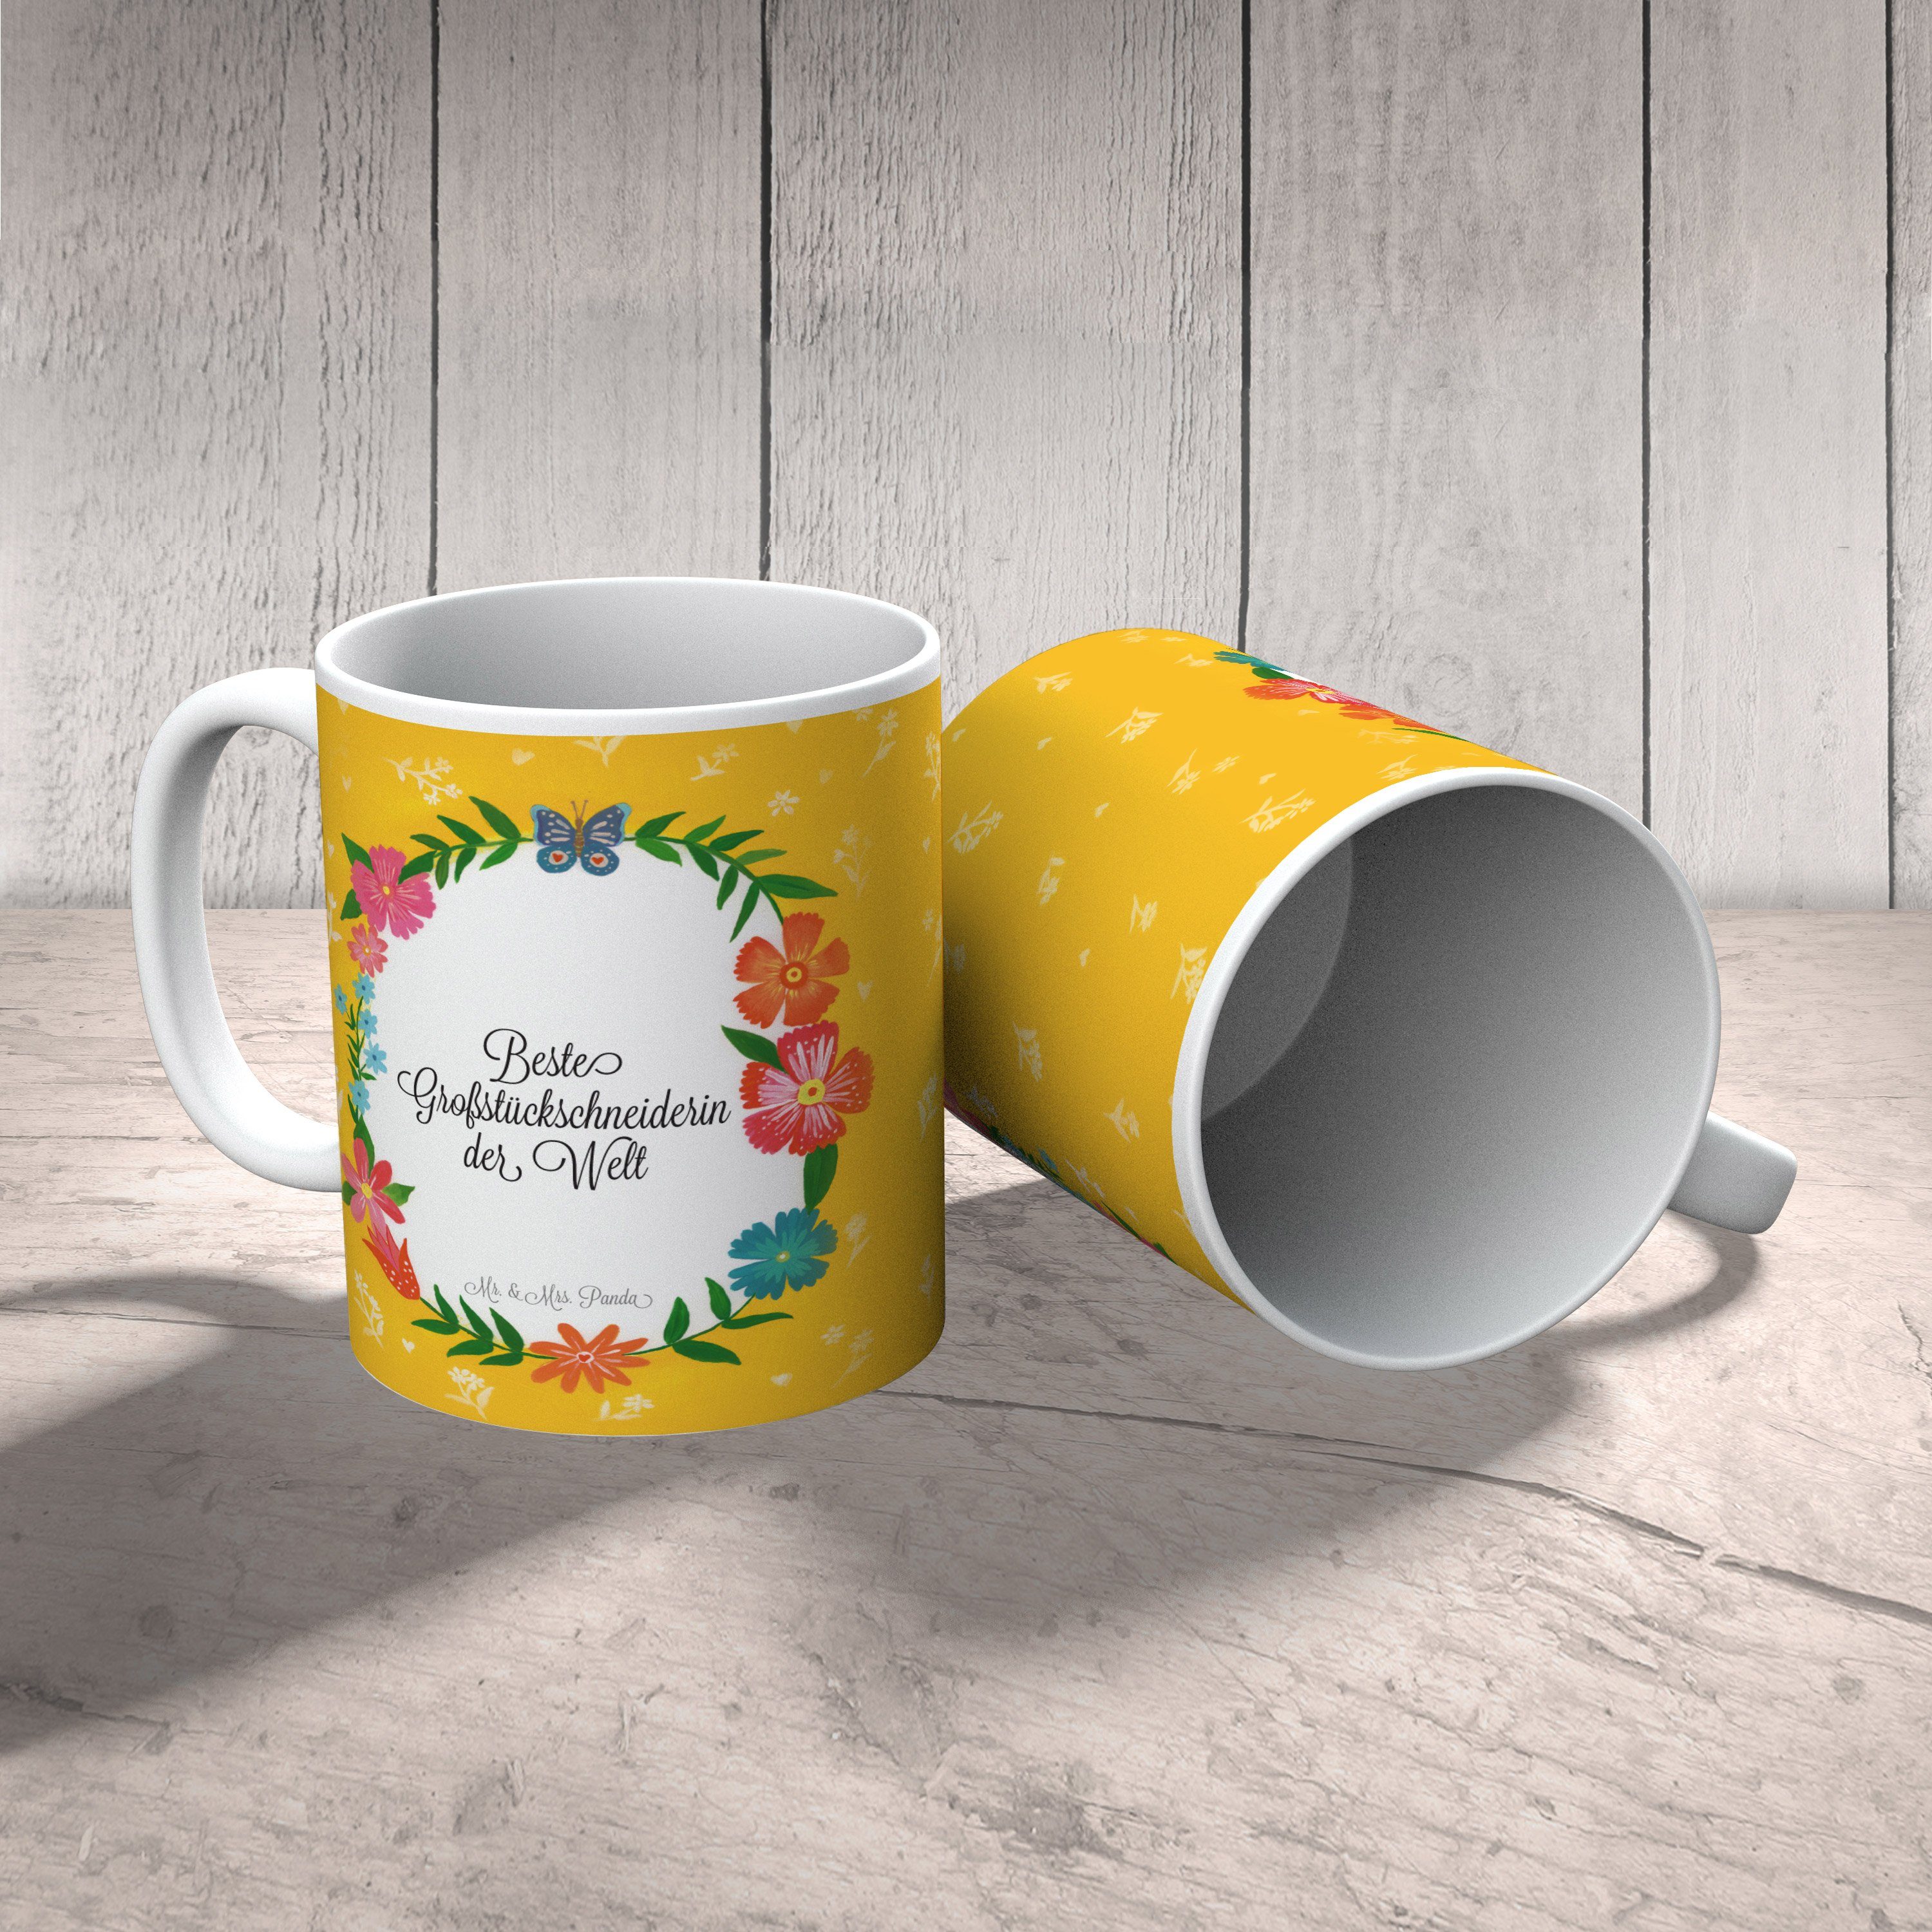 Keramik Kaffeetasse, Tasse Geschenk, Großstückschneiderin Keramiktasse, Mr. - Mrs. & Schenken, Panda